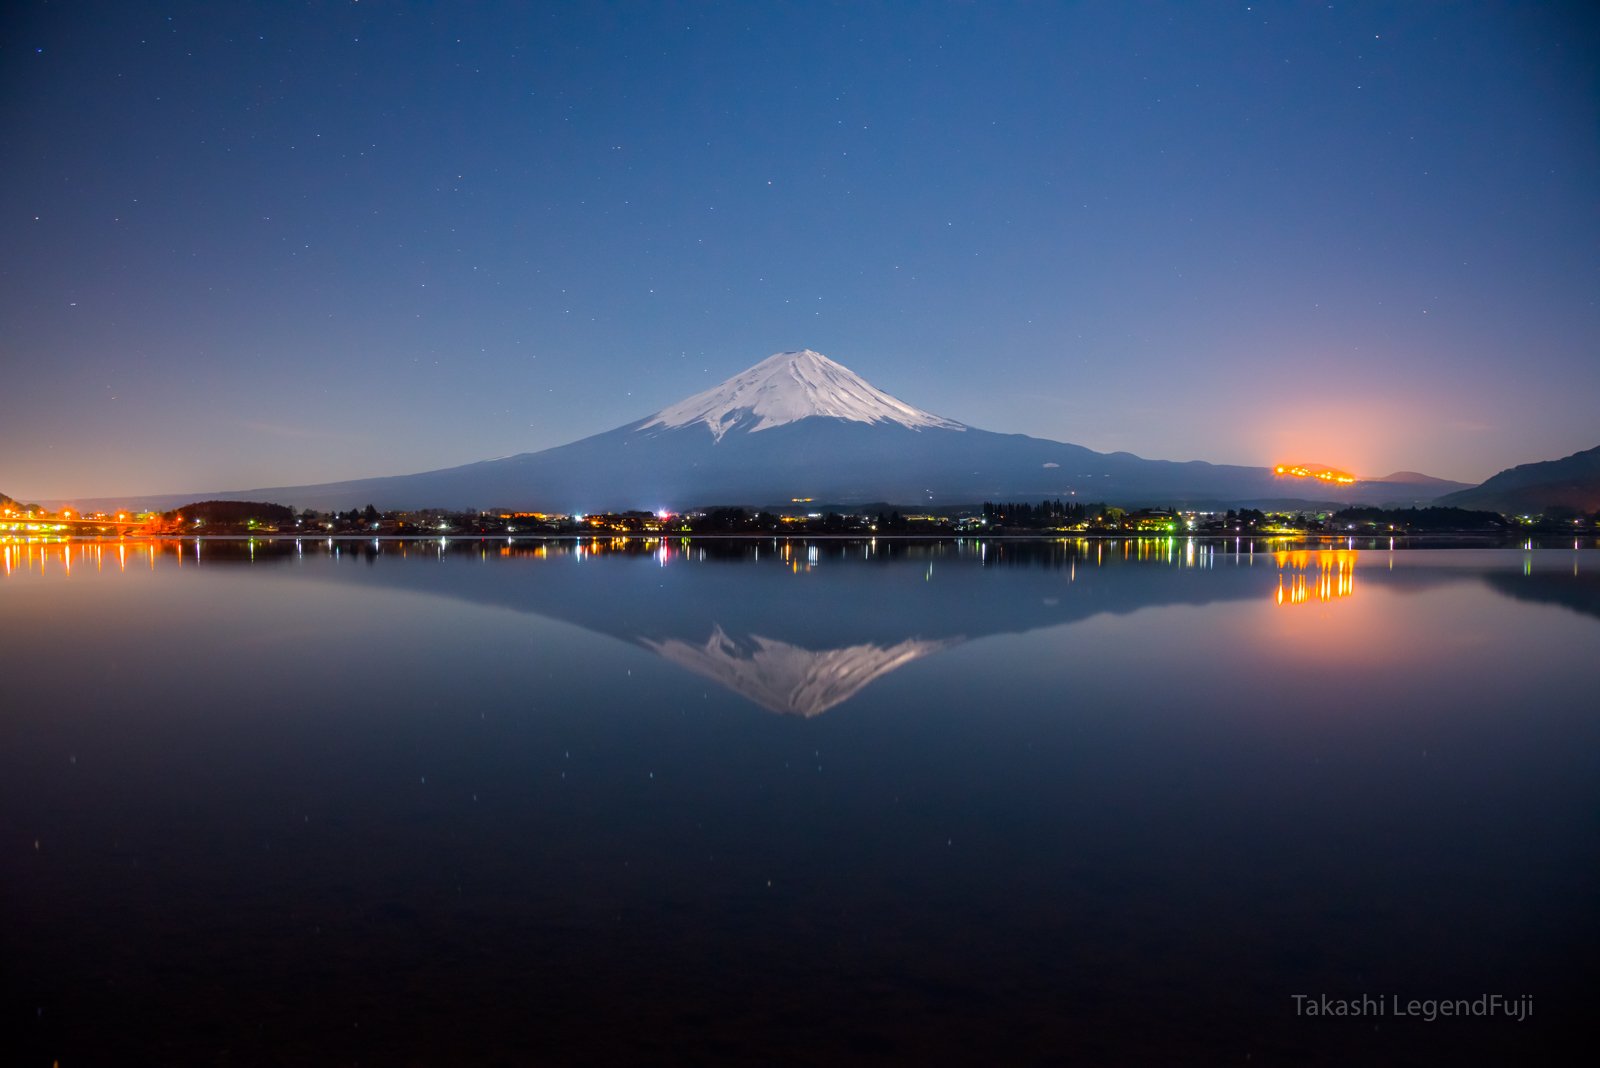 Fuji,mountain,Japan,night,lake,water,moon,reflection,beautiful,snow, Takashi